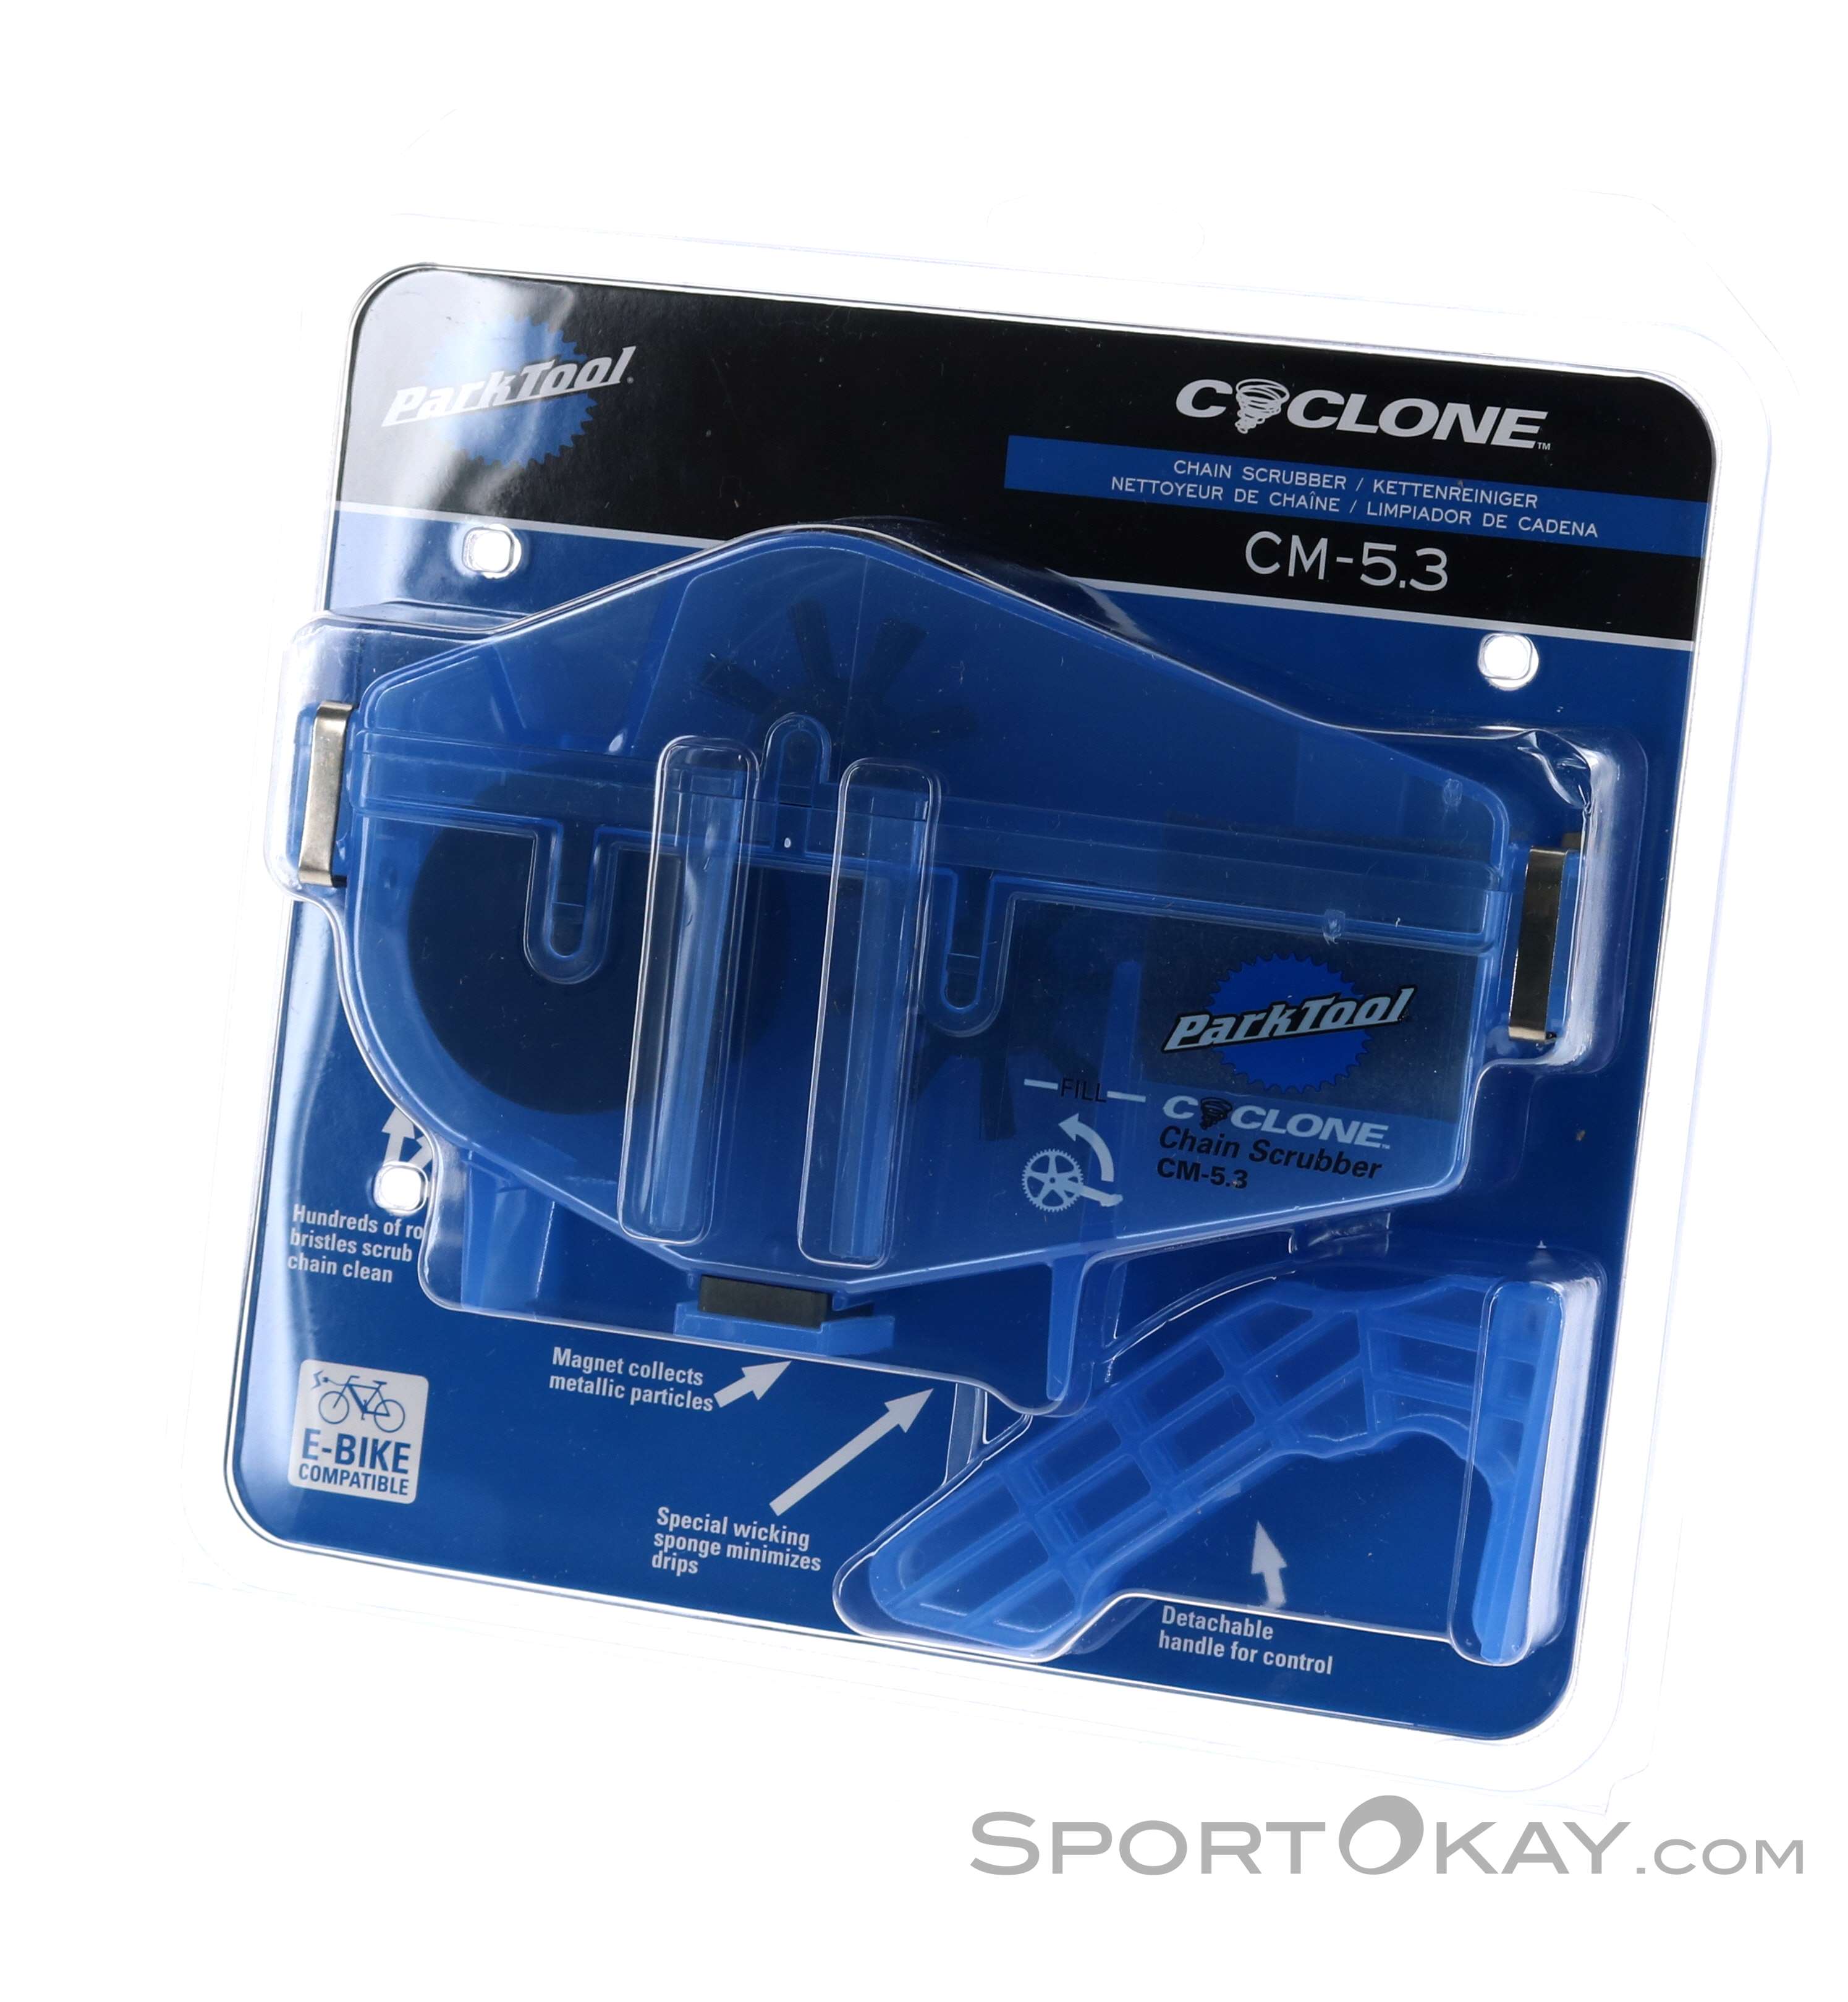 Park Tool Cyclone Chain Scrubber - CM-5 - Accessories